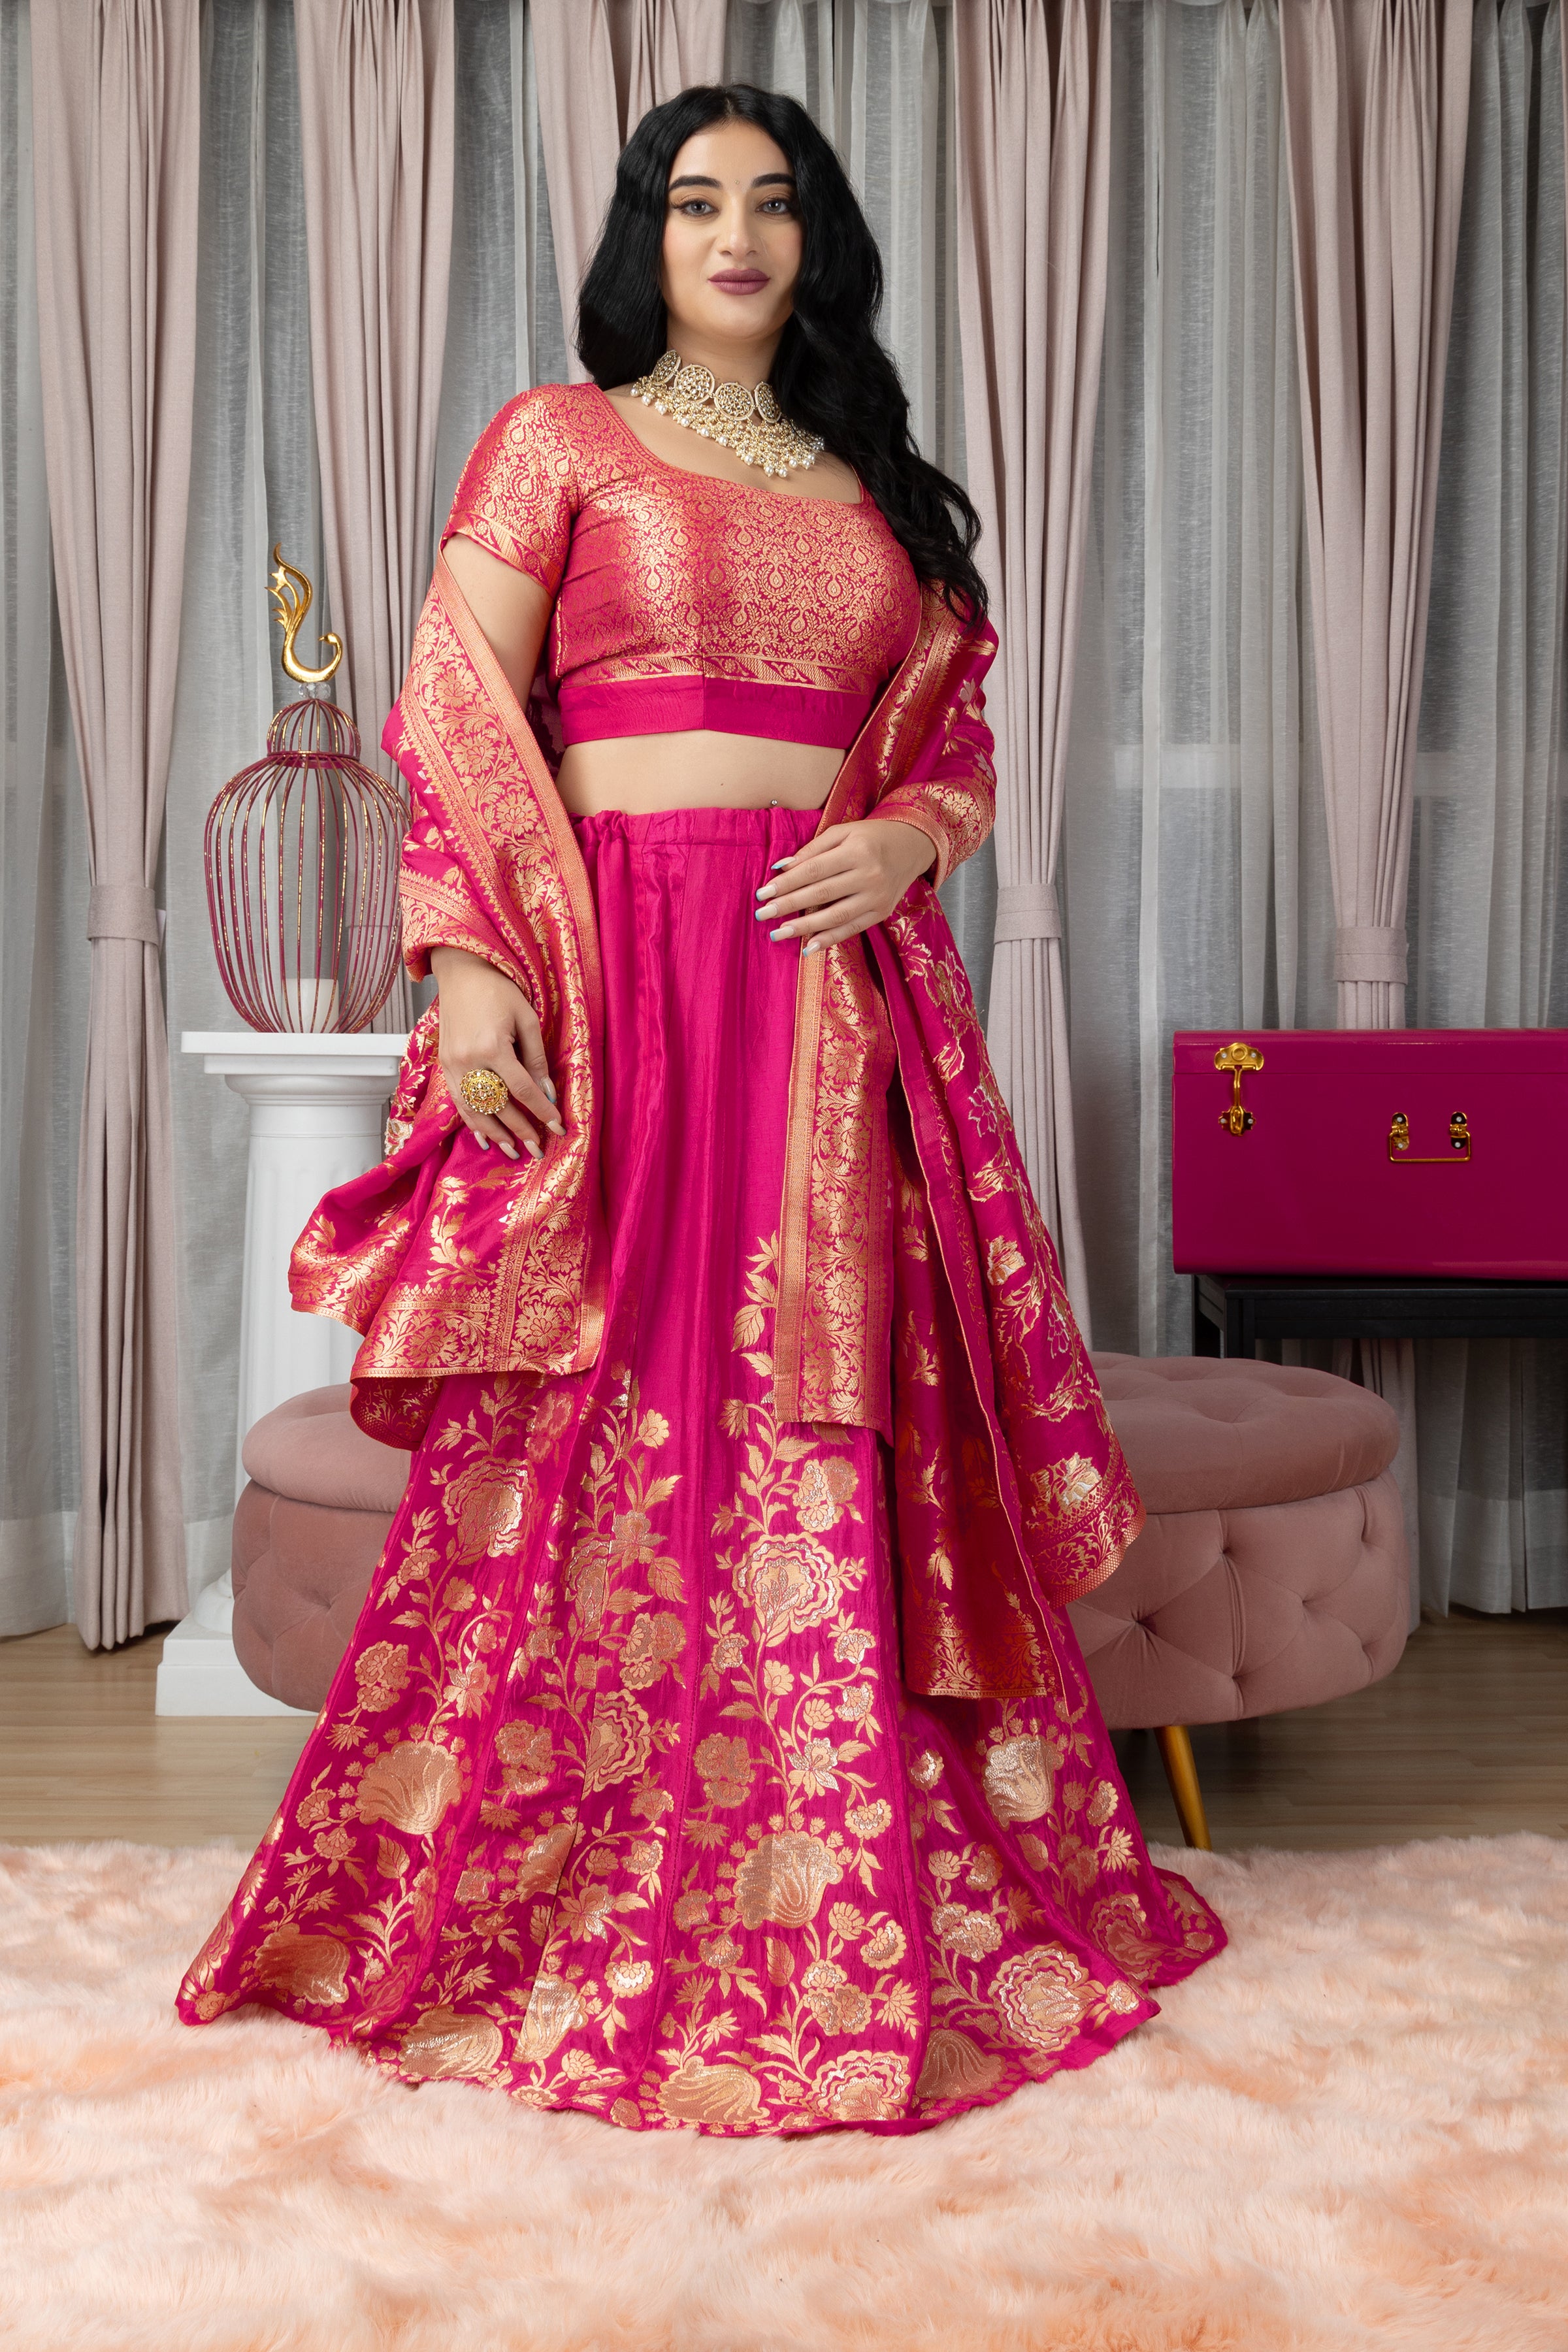 Mizzific Women's Bridal Collection Wedding Heavy Banglori Lehenga Choli  With Dupatta For Girls, Ladies Or Womens | Big Fat Indian Wedding -  Multicolored